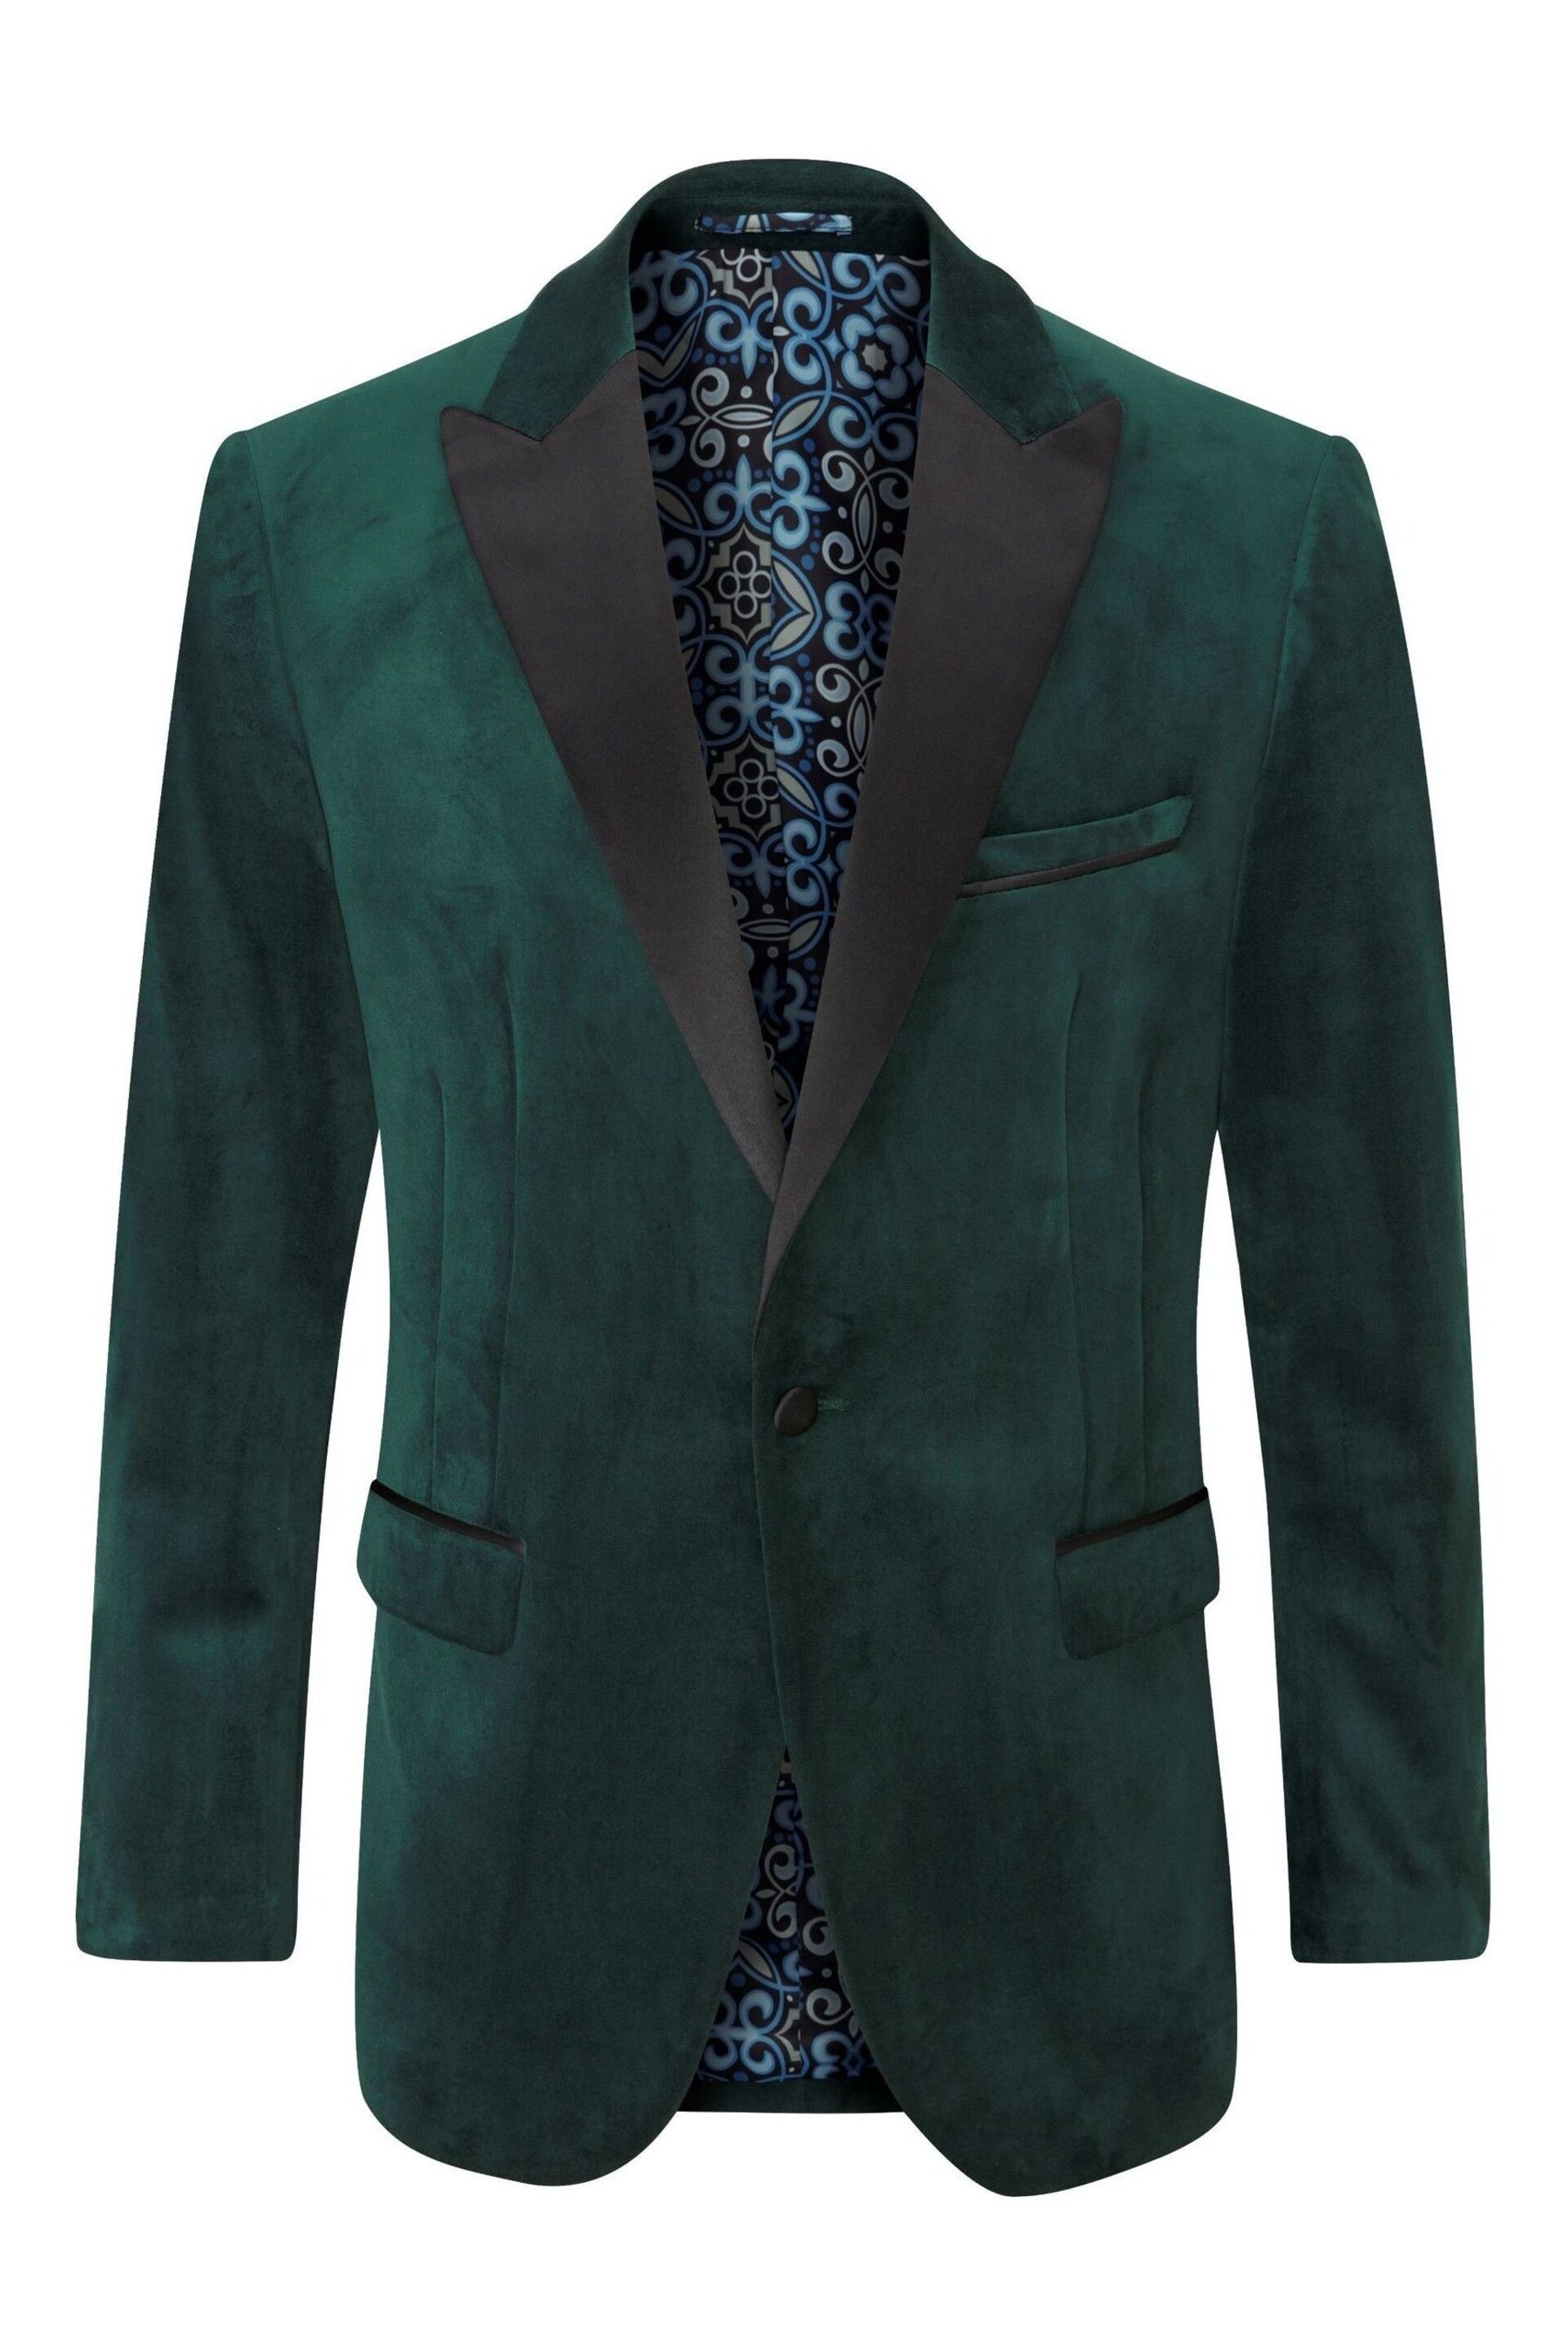 Skopes Jive Emerald Green Tailored Fit Velvet Jacket - Image 6 of 7